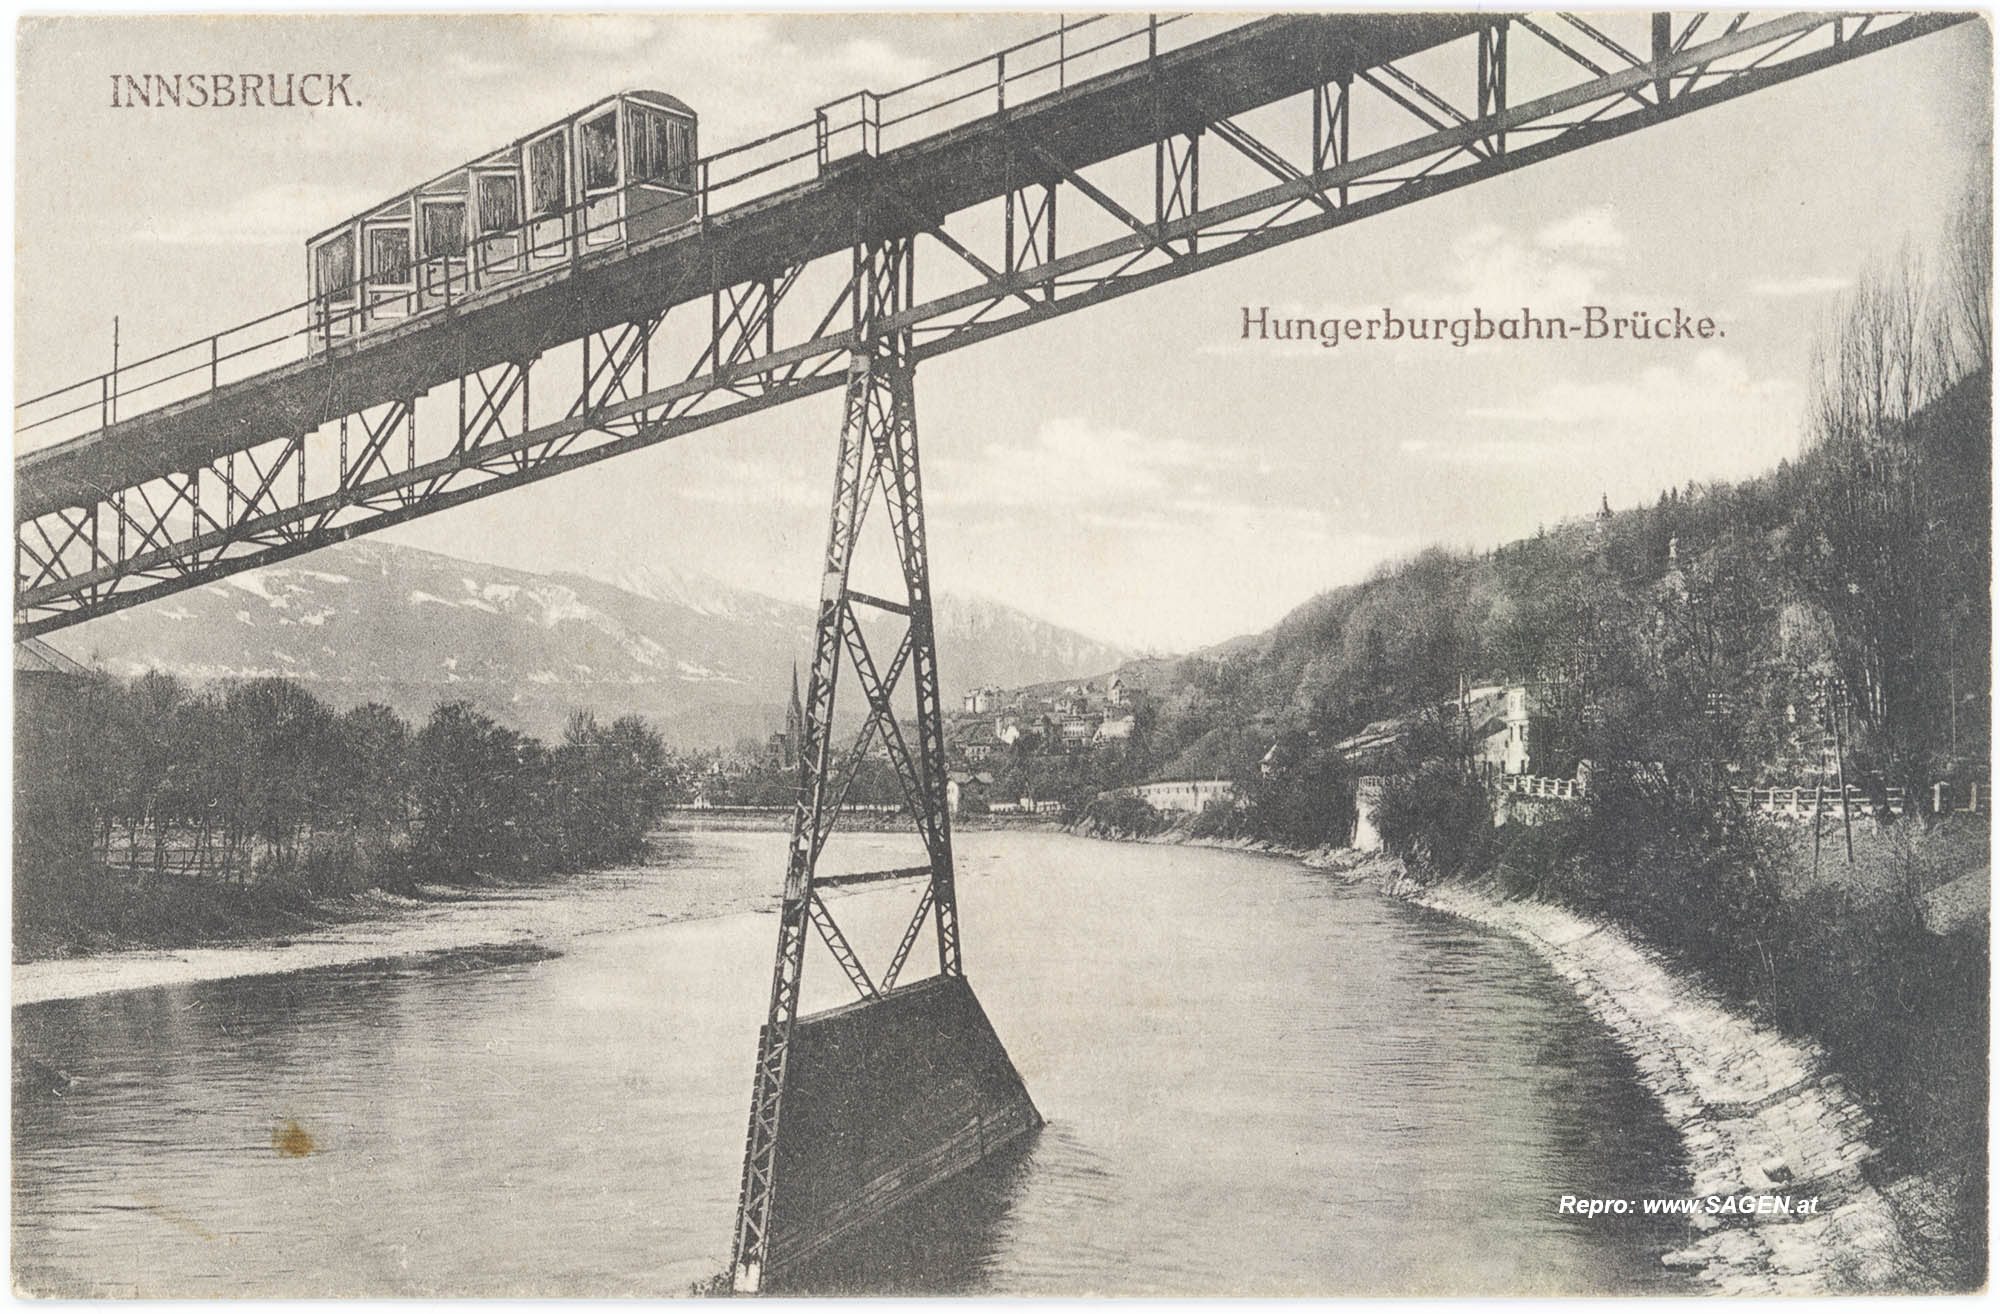 Innsbruck. Hungerburgbahn-Brücke